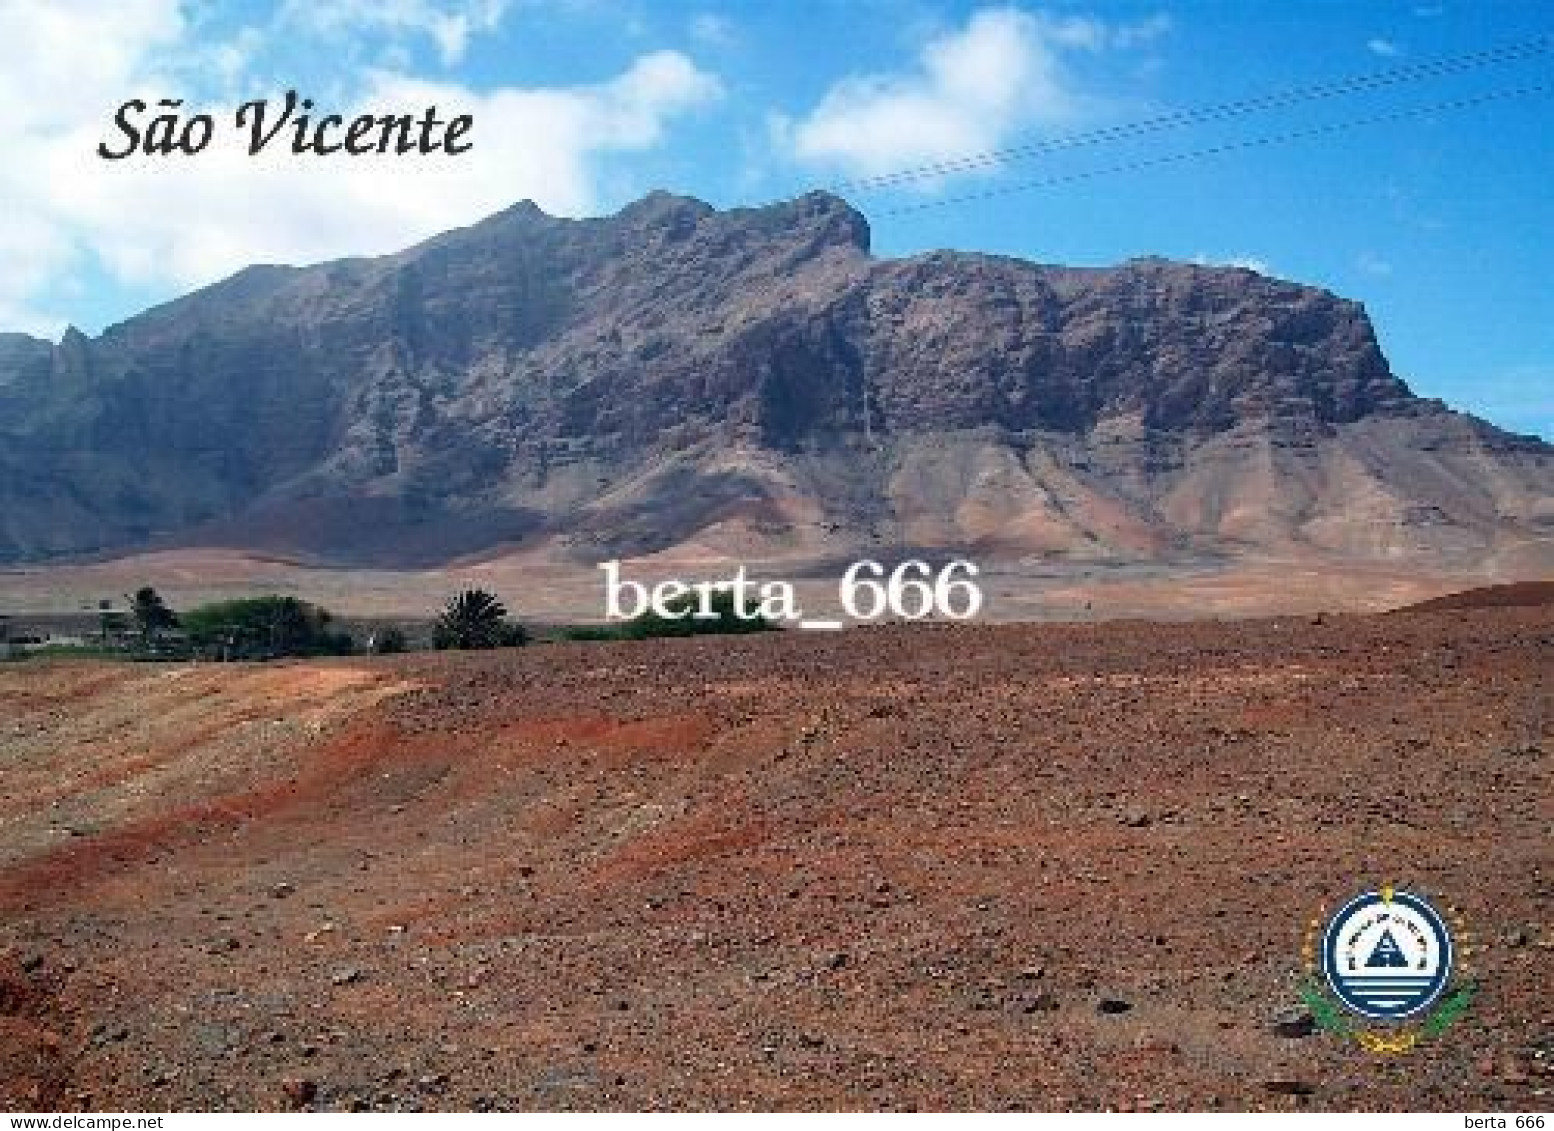 Cape Verde Sao Vicente Island New Postcard - Cap Verde